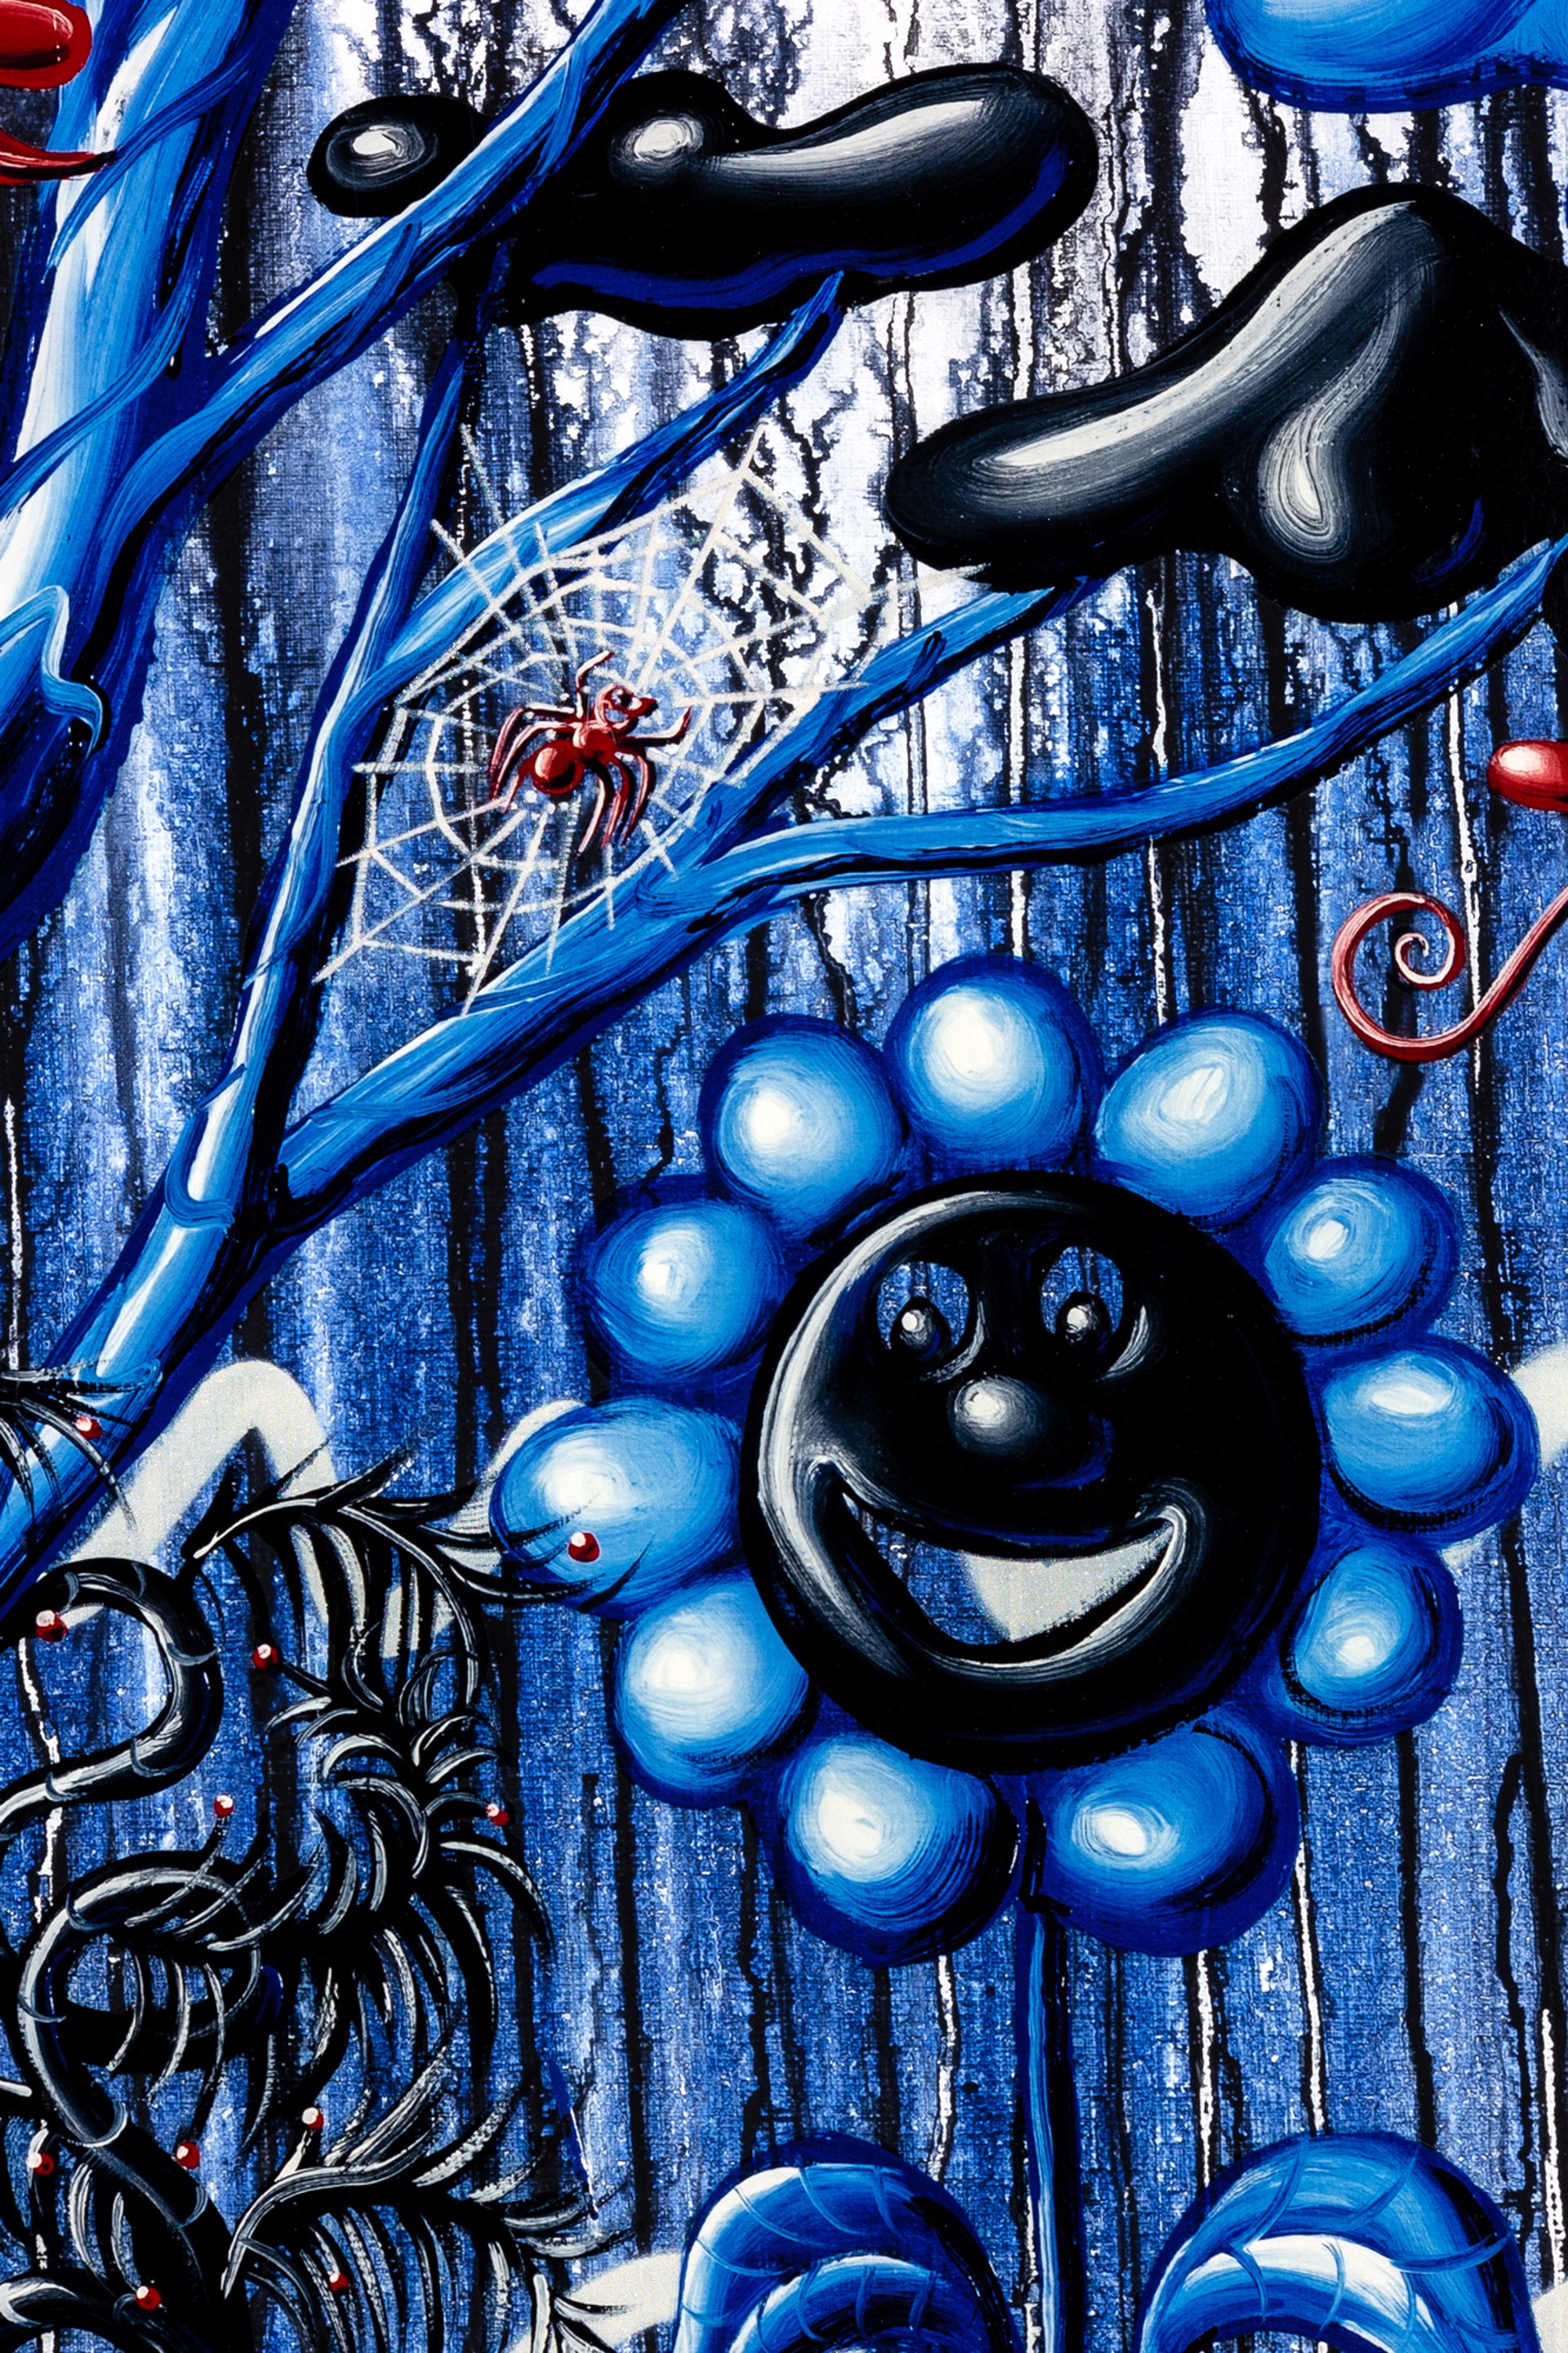 Furungle Blue by Kenny Scharf